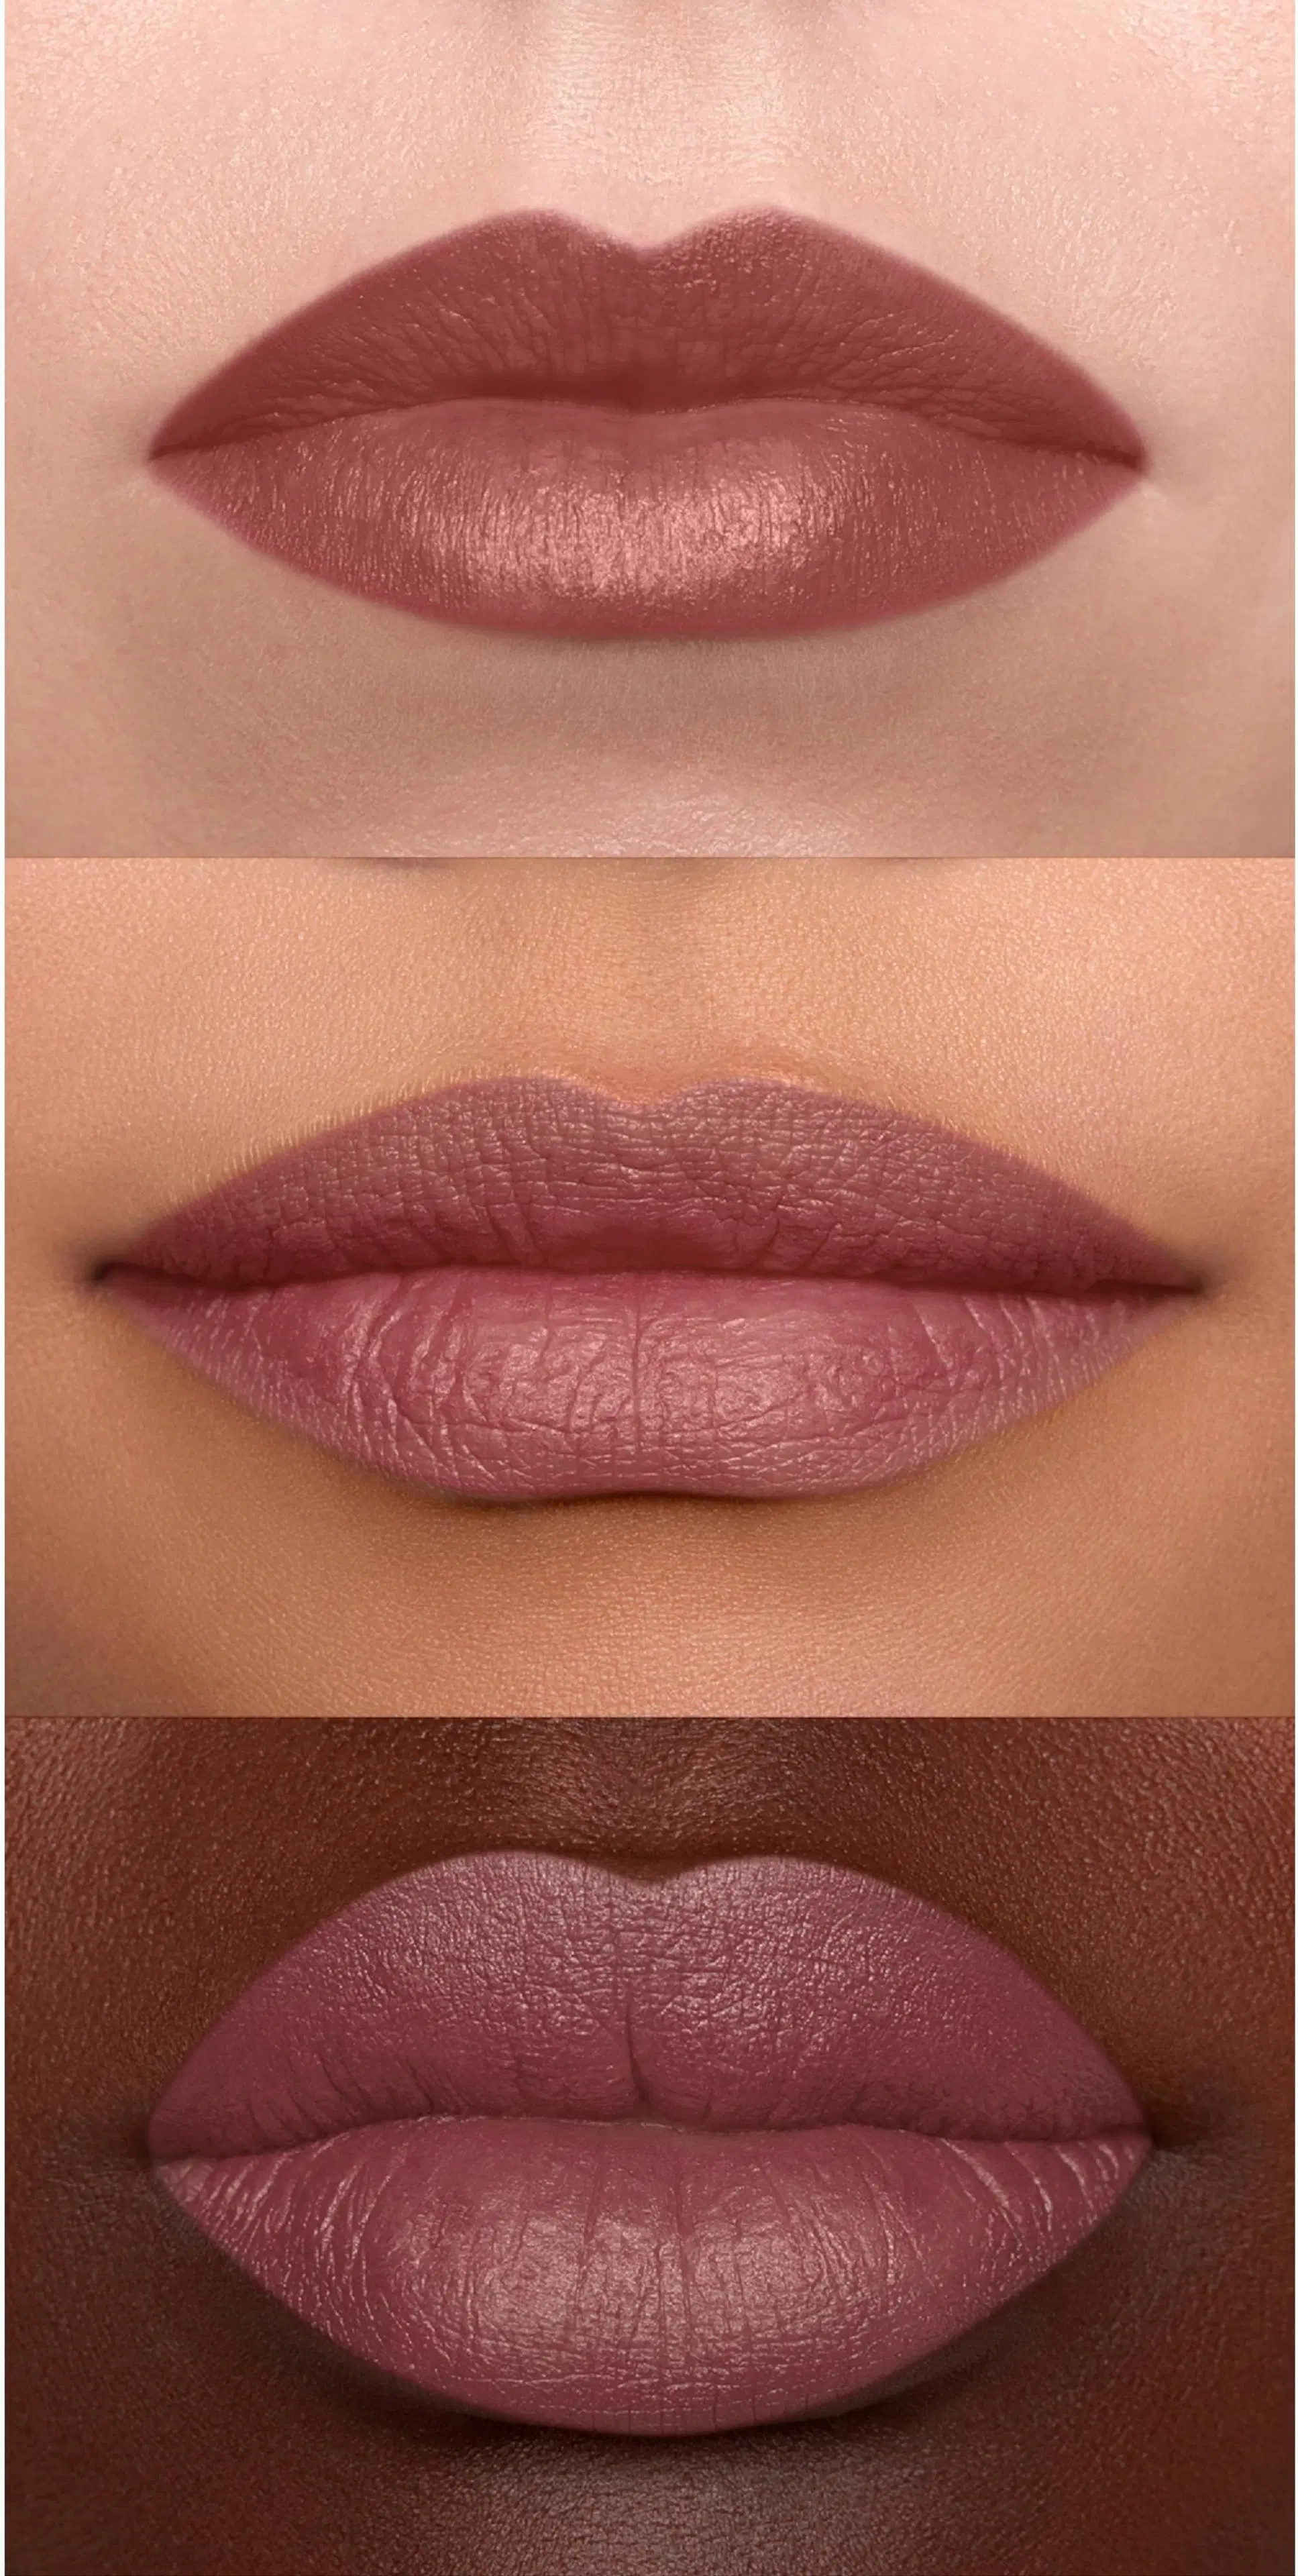 NYX Professional Makeup Suede Matte Lipstick huulipuna 3,5g